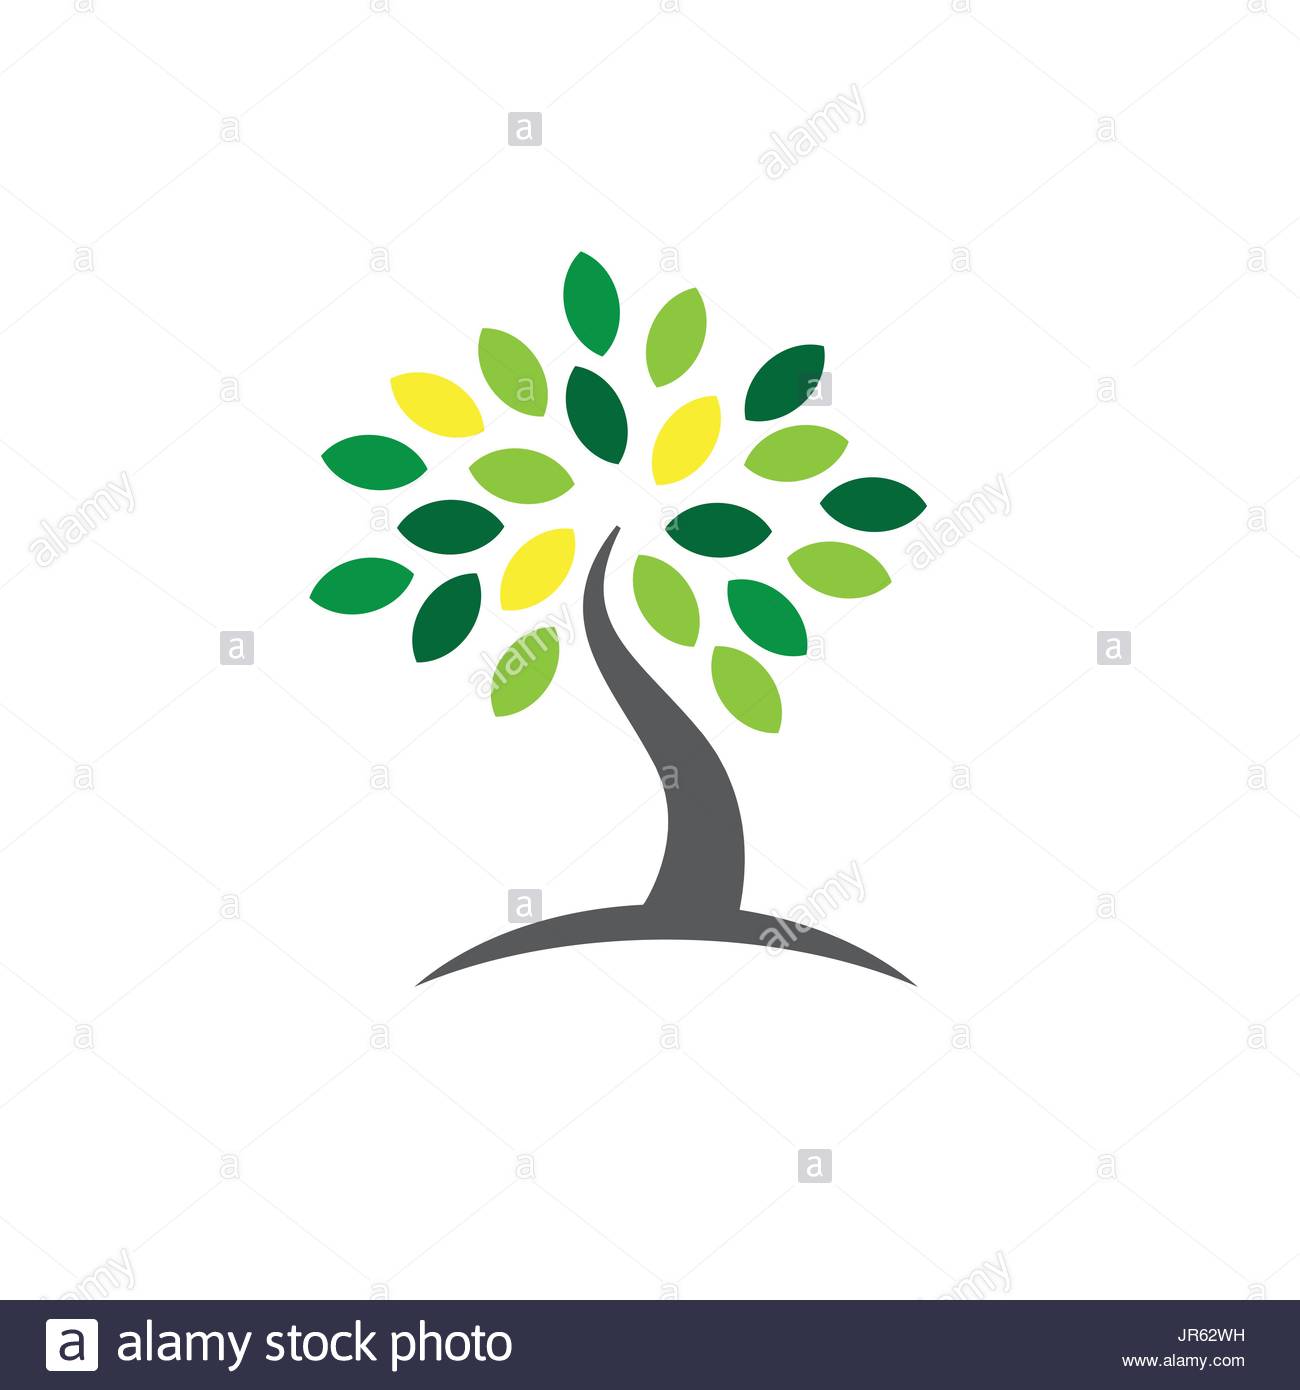 Dynasty, genealogical, genealogy, hierarchy, parents tree 